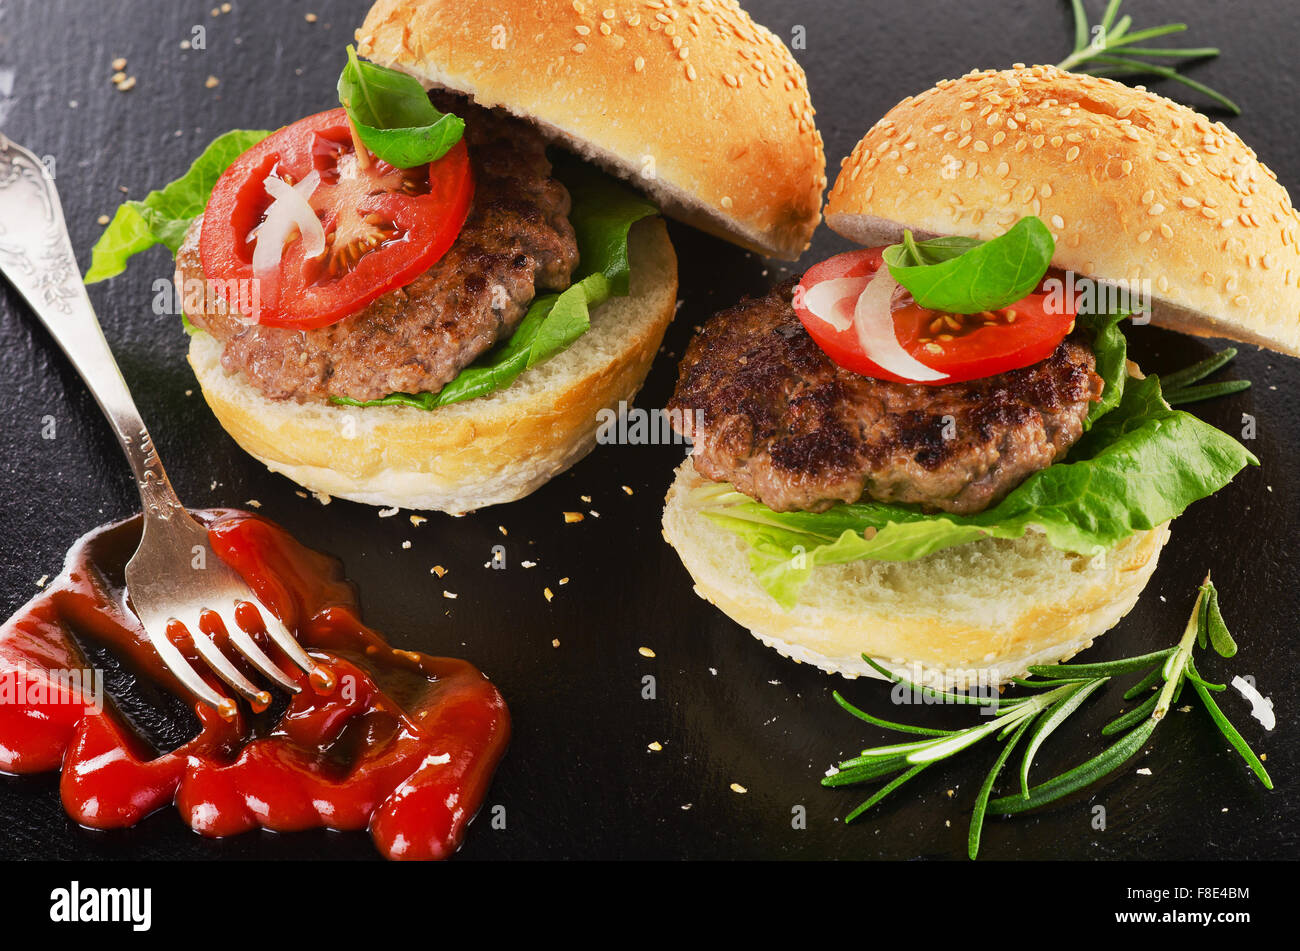 Homemade burger on dark background. Selective focus Stock Photo